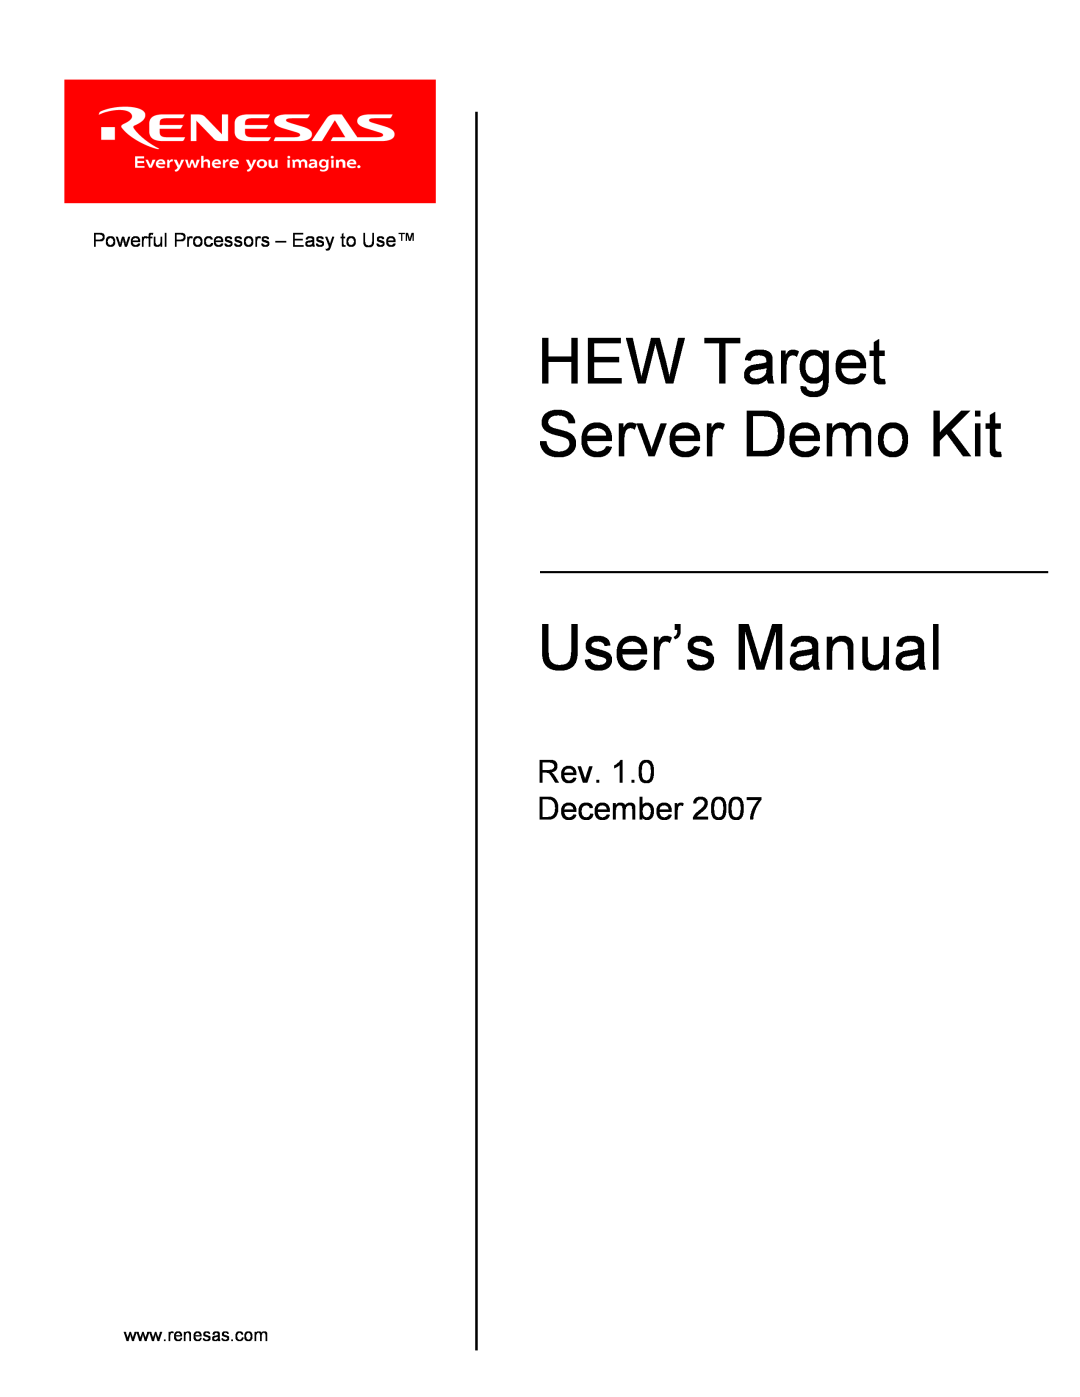 Renesas user manual HEW Target Server Demo Kit User’s Manual, Rev December, Powerful Processors - Easy to Use 